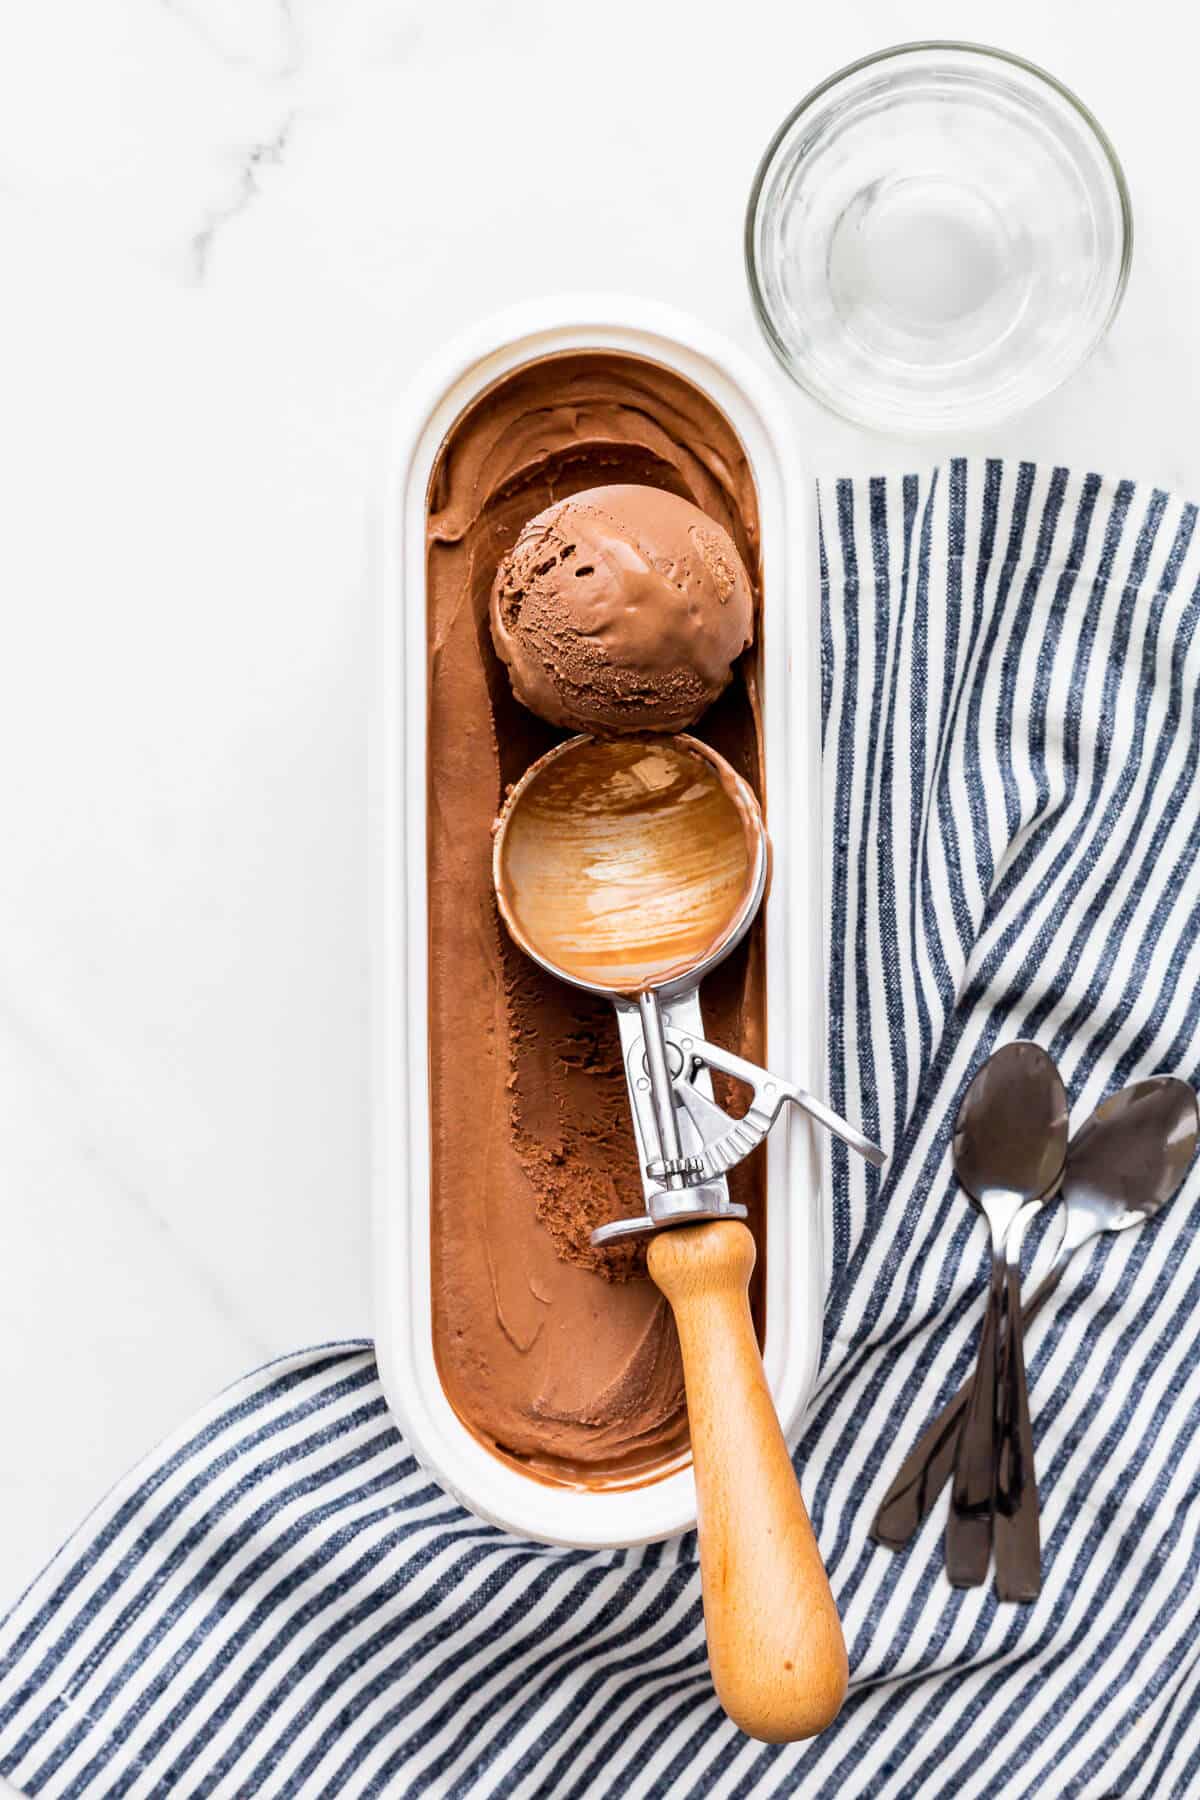 Scooping homemade dark chocolate ice cream with an ice cream scoop.